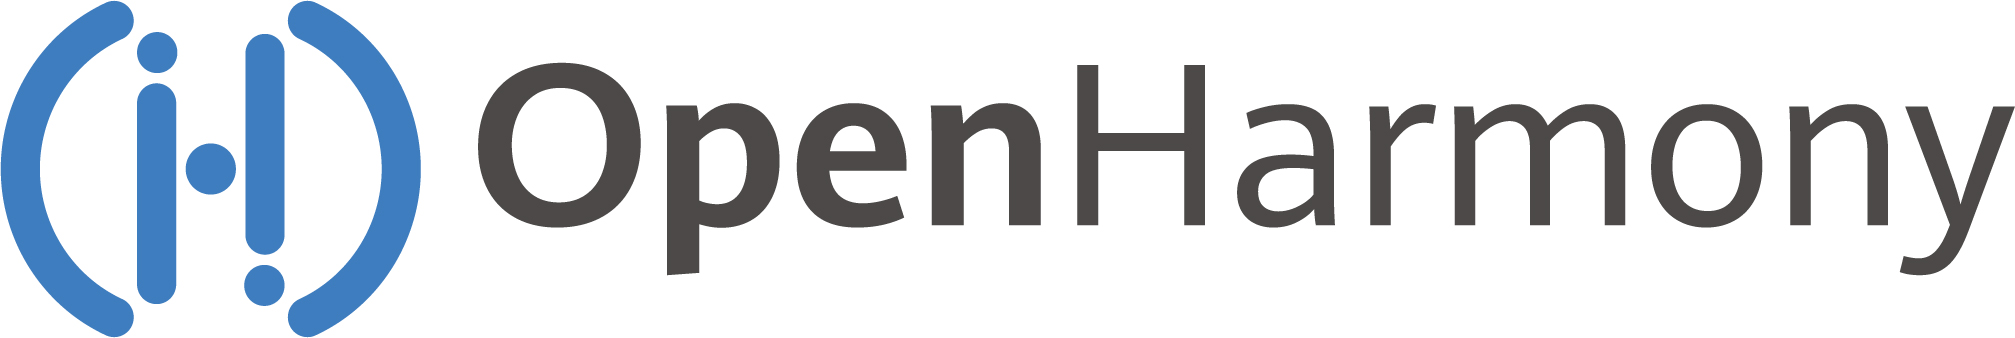 logo/OpenHarmony Horizontal-01.jpg